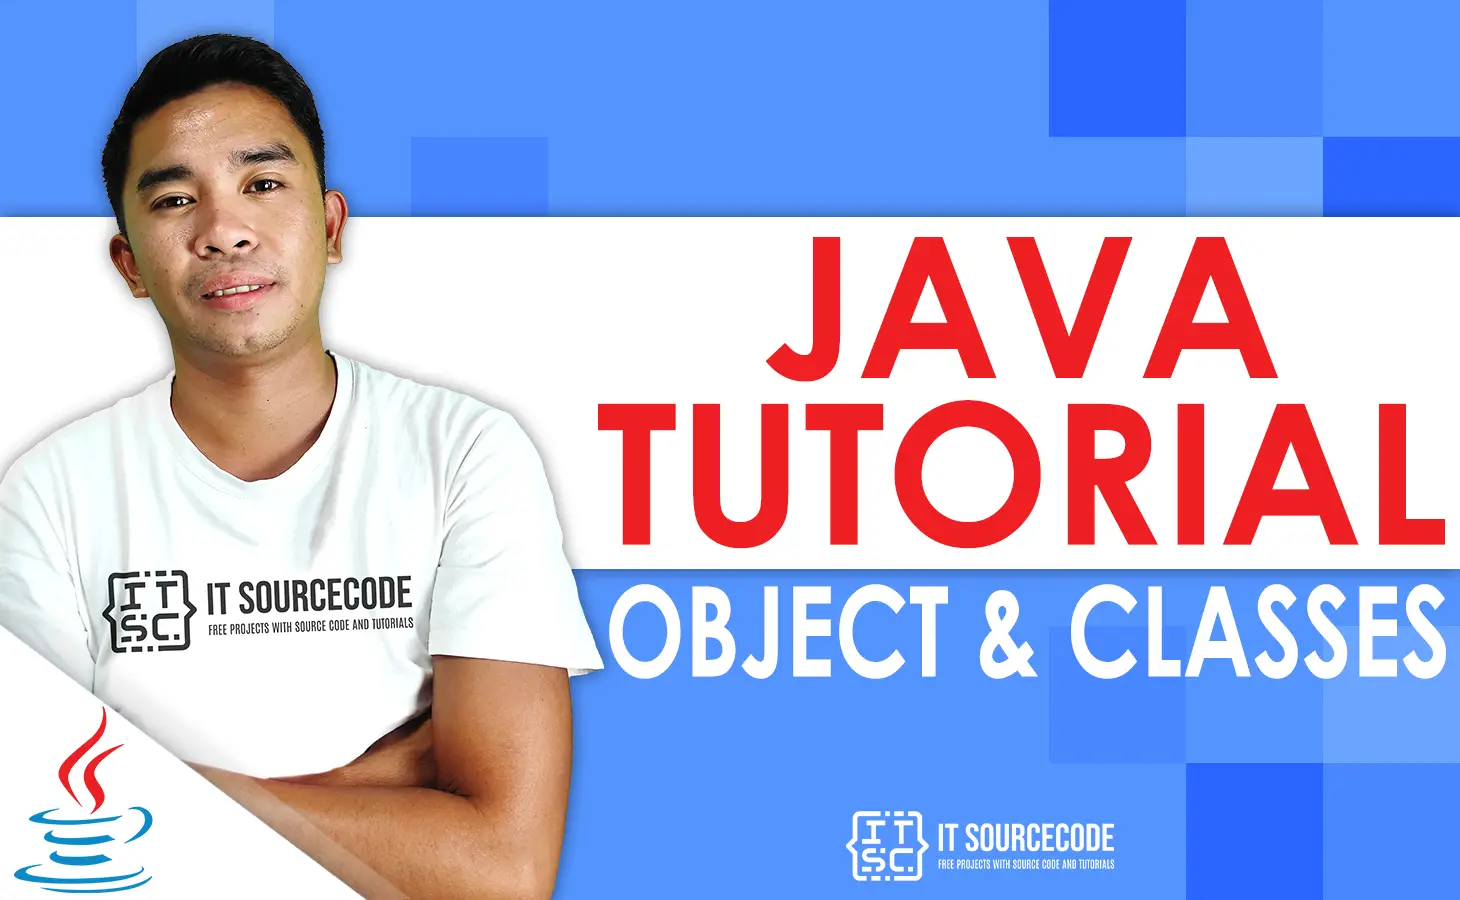 Java Object & Classes